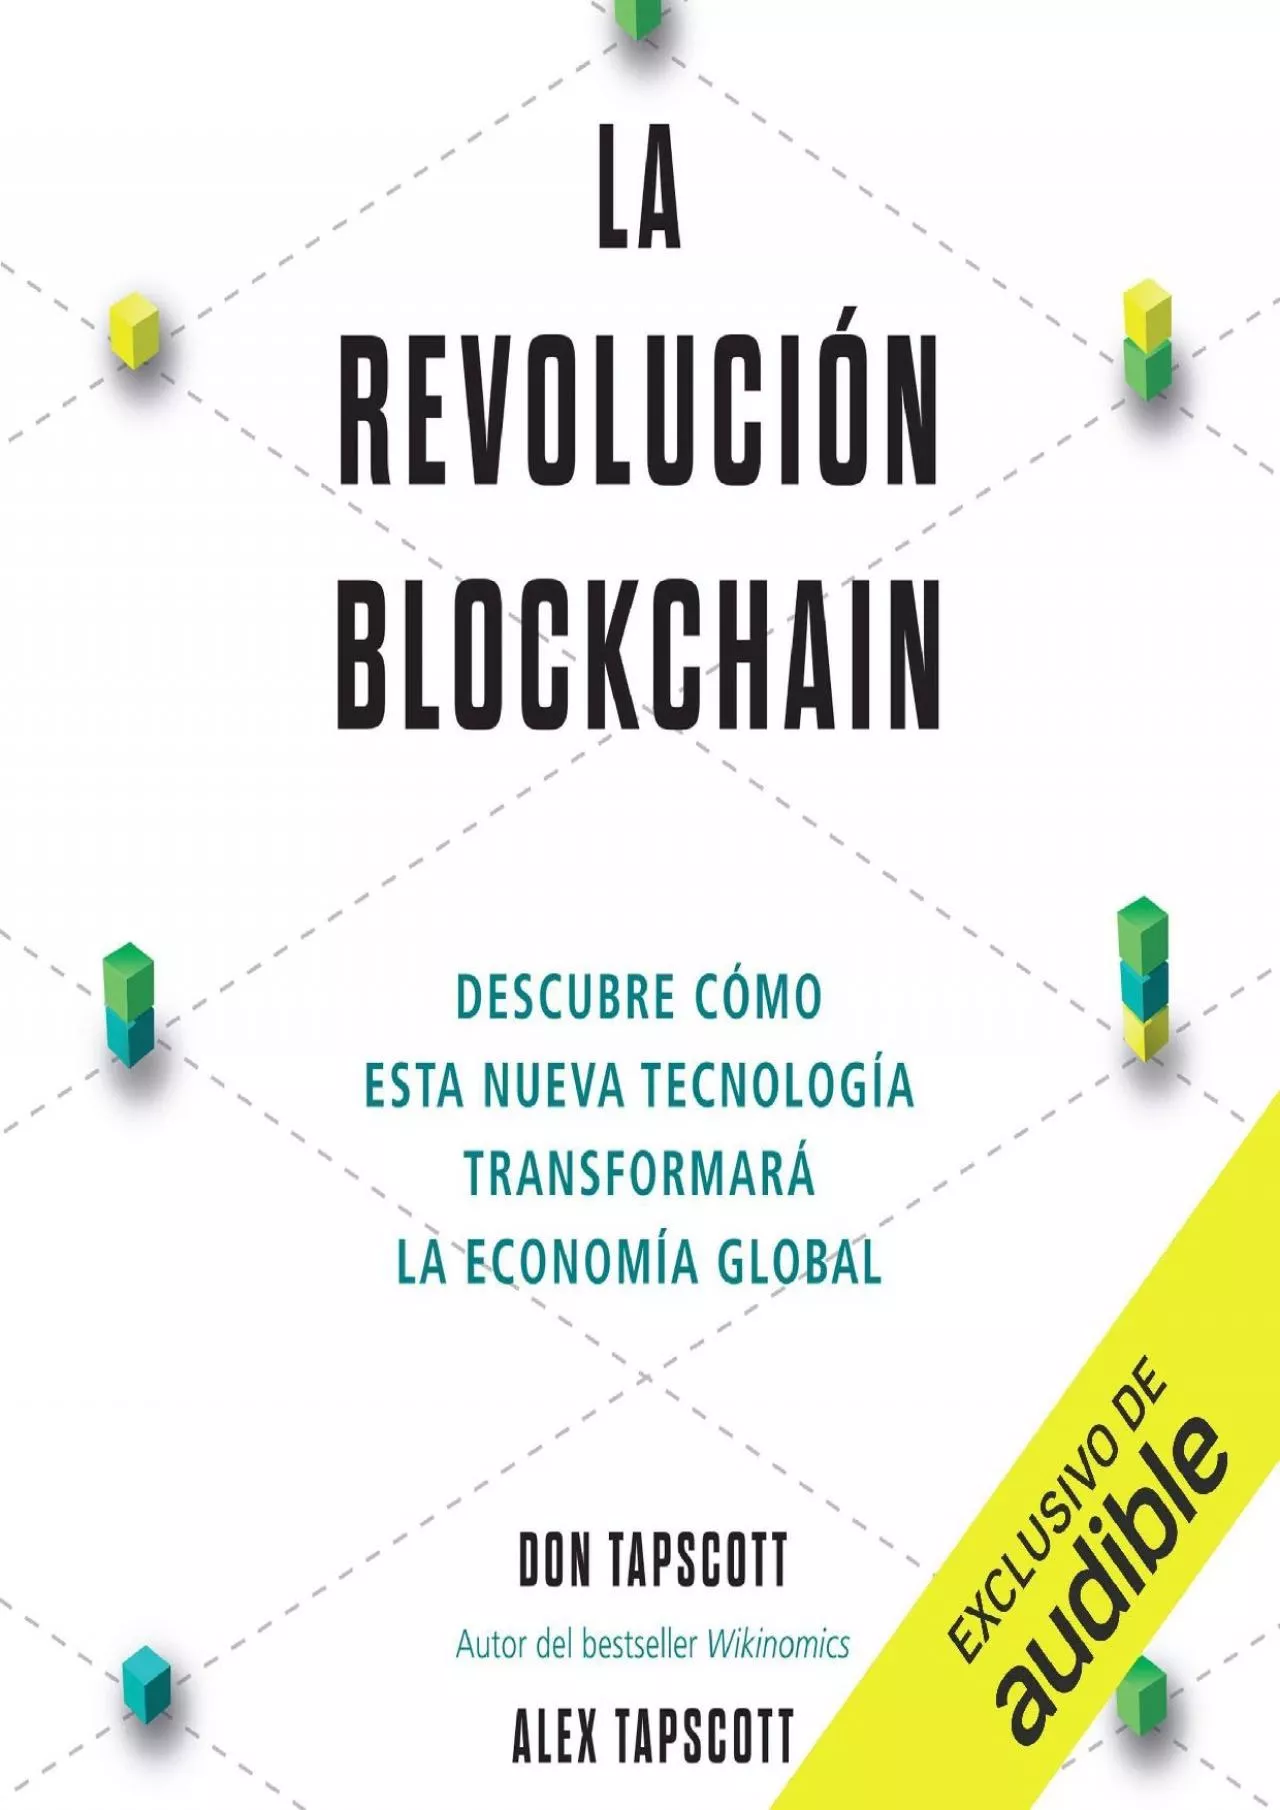 (DOWNLOAD)-La revolución blockchain [The Blockchain Revolution]